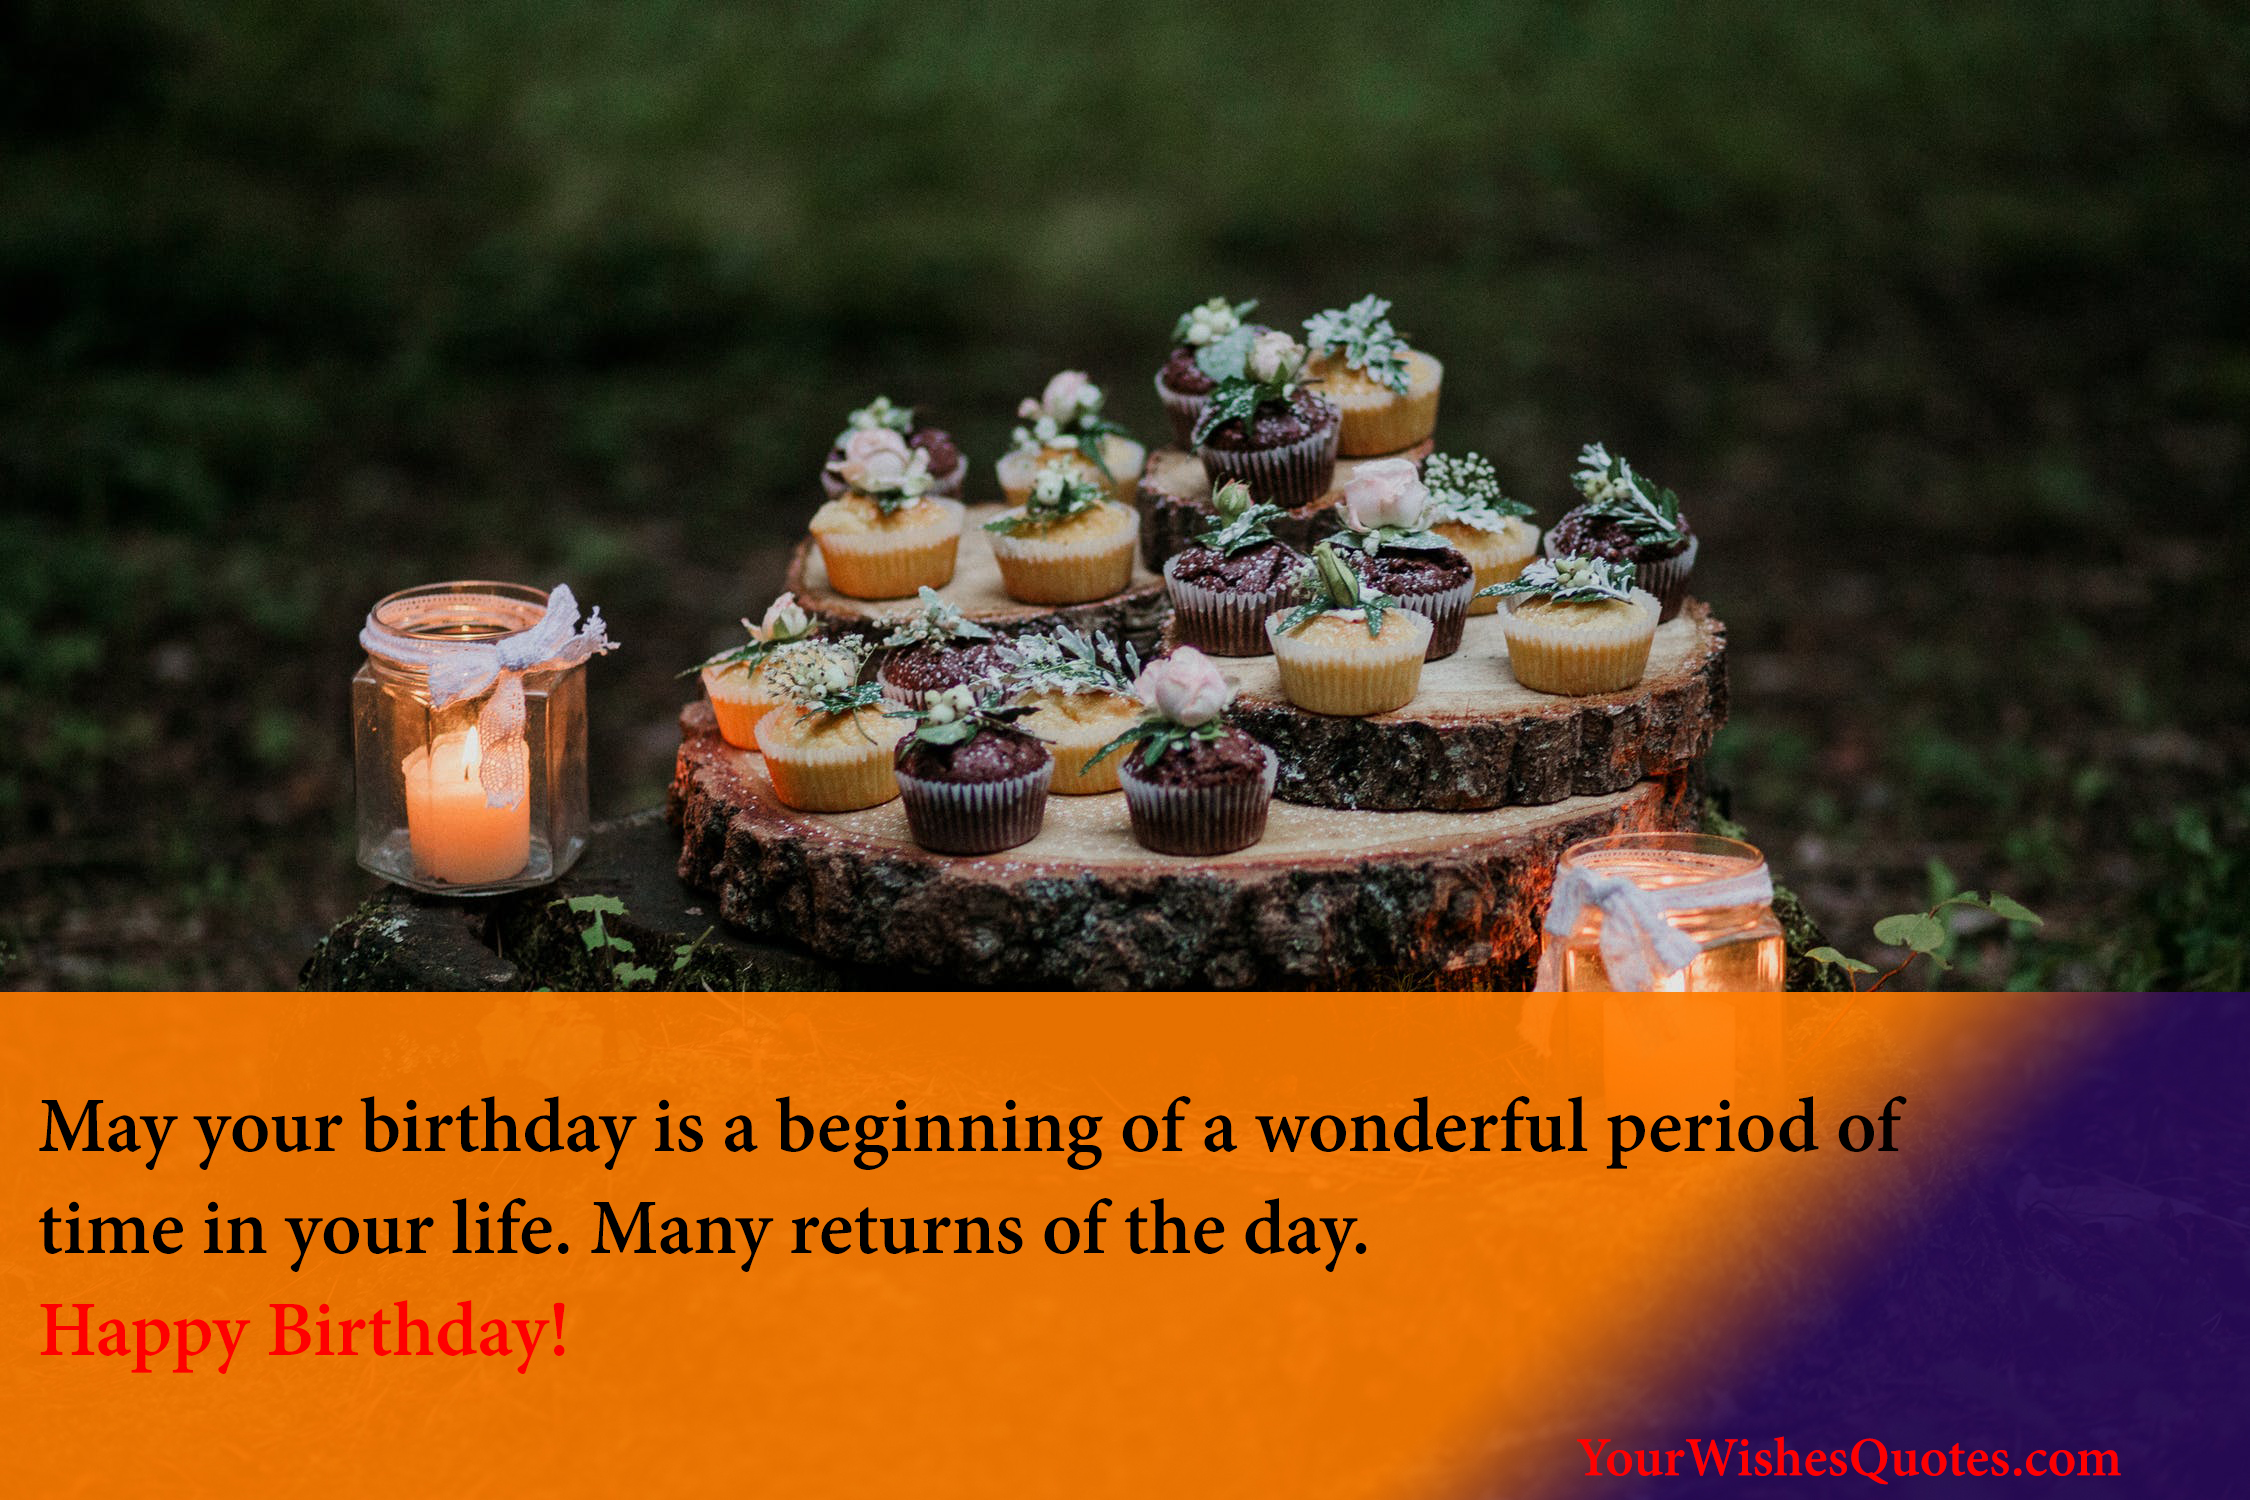 Happy Birthday Quotes Image with Cake